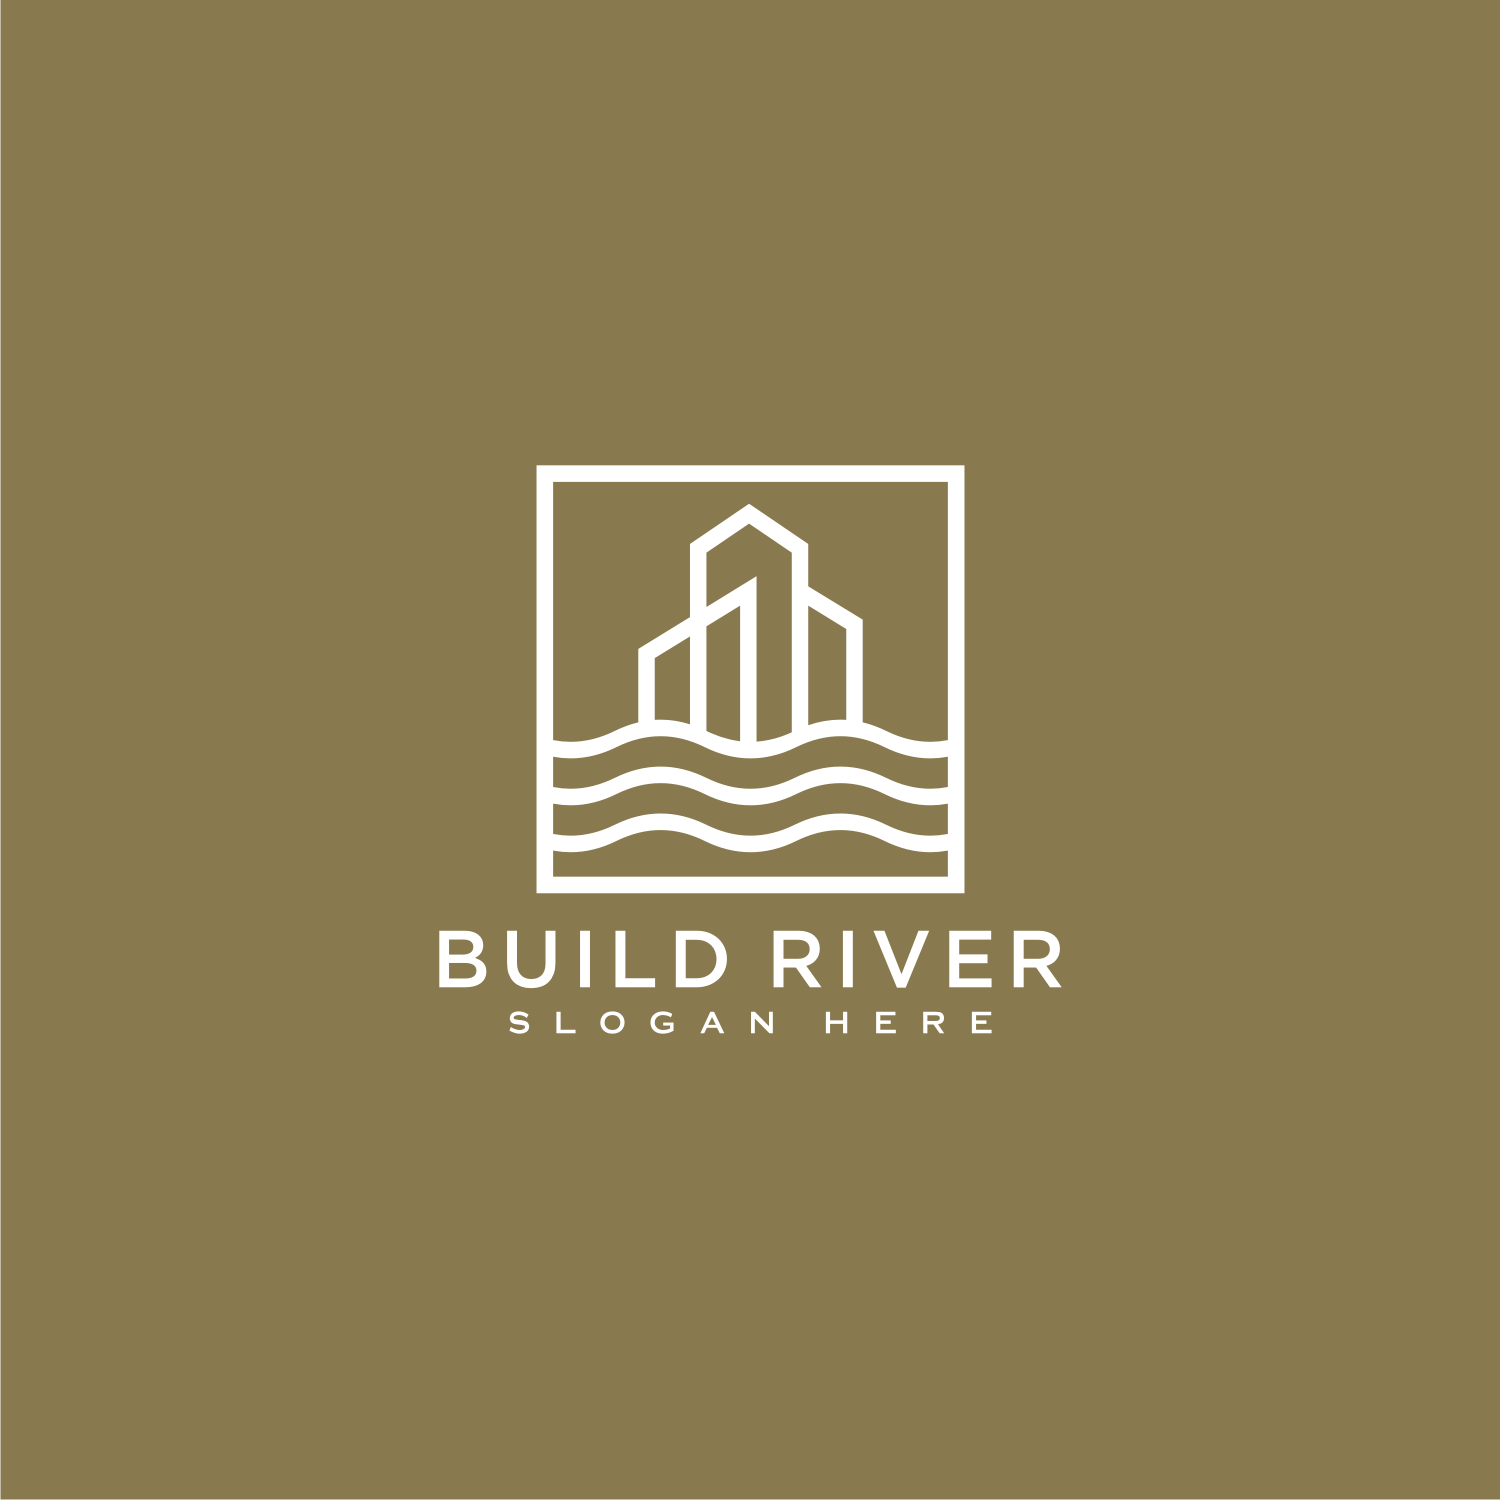 Building River Logo Vector Design Template Preview Image.